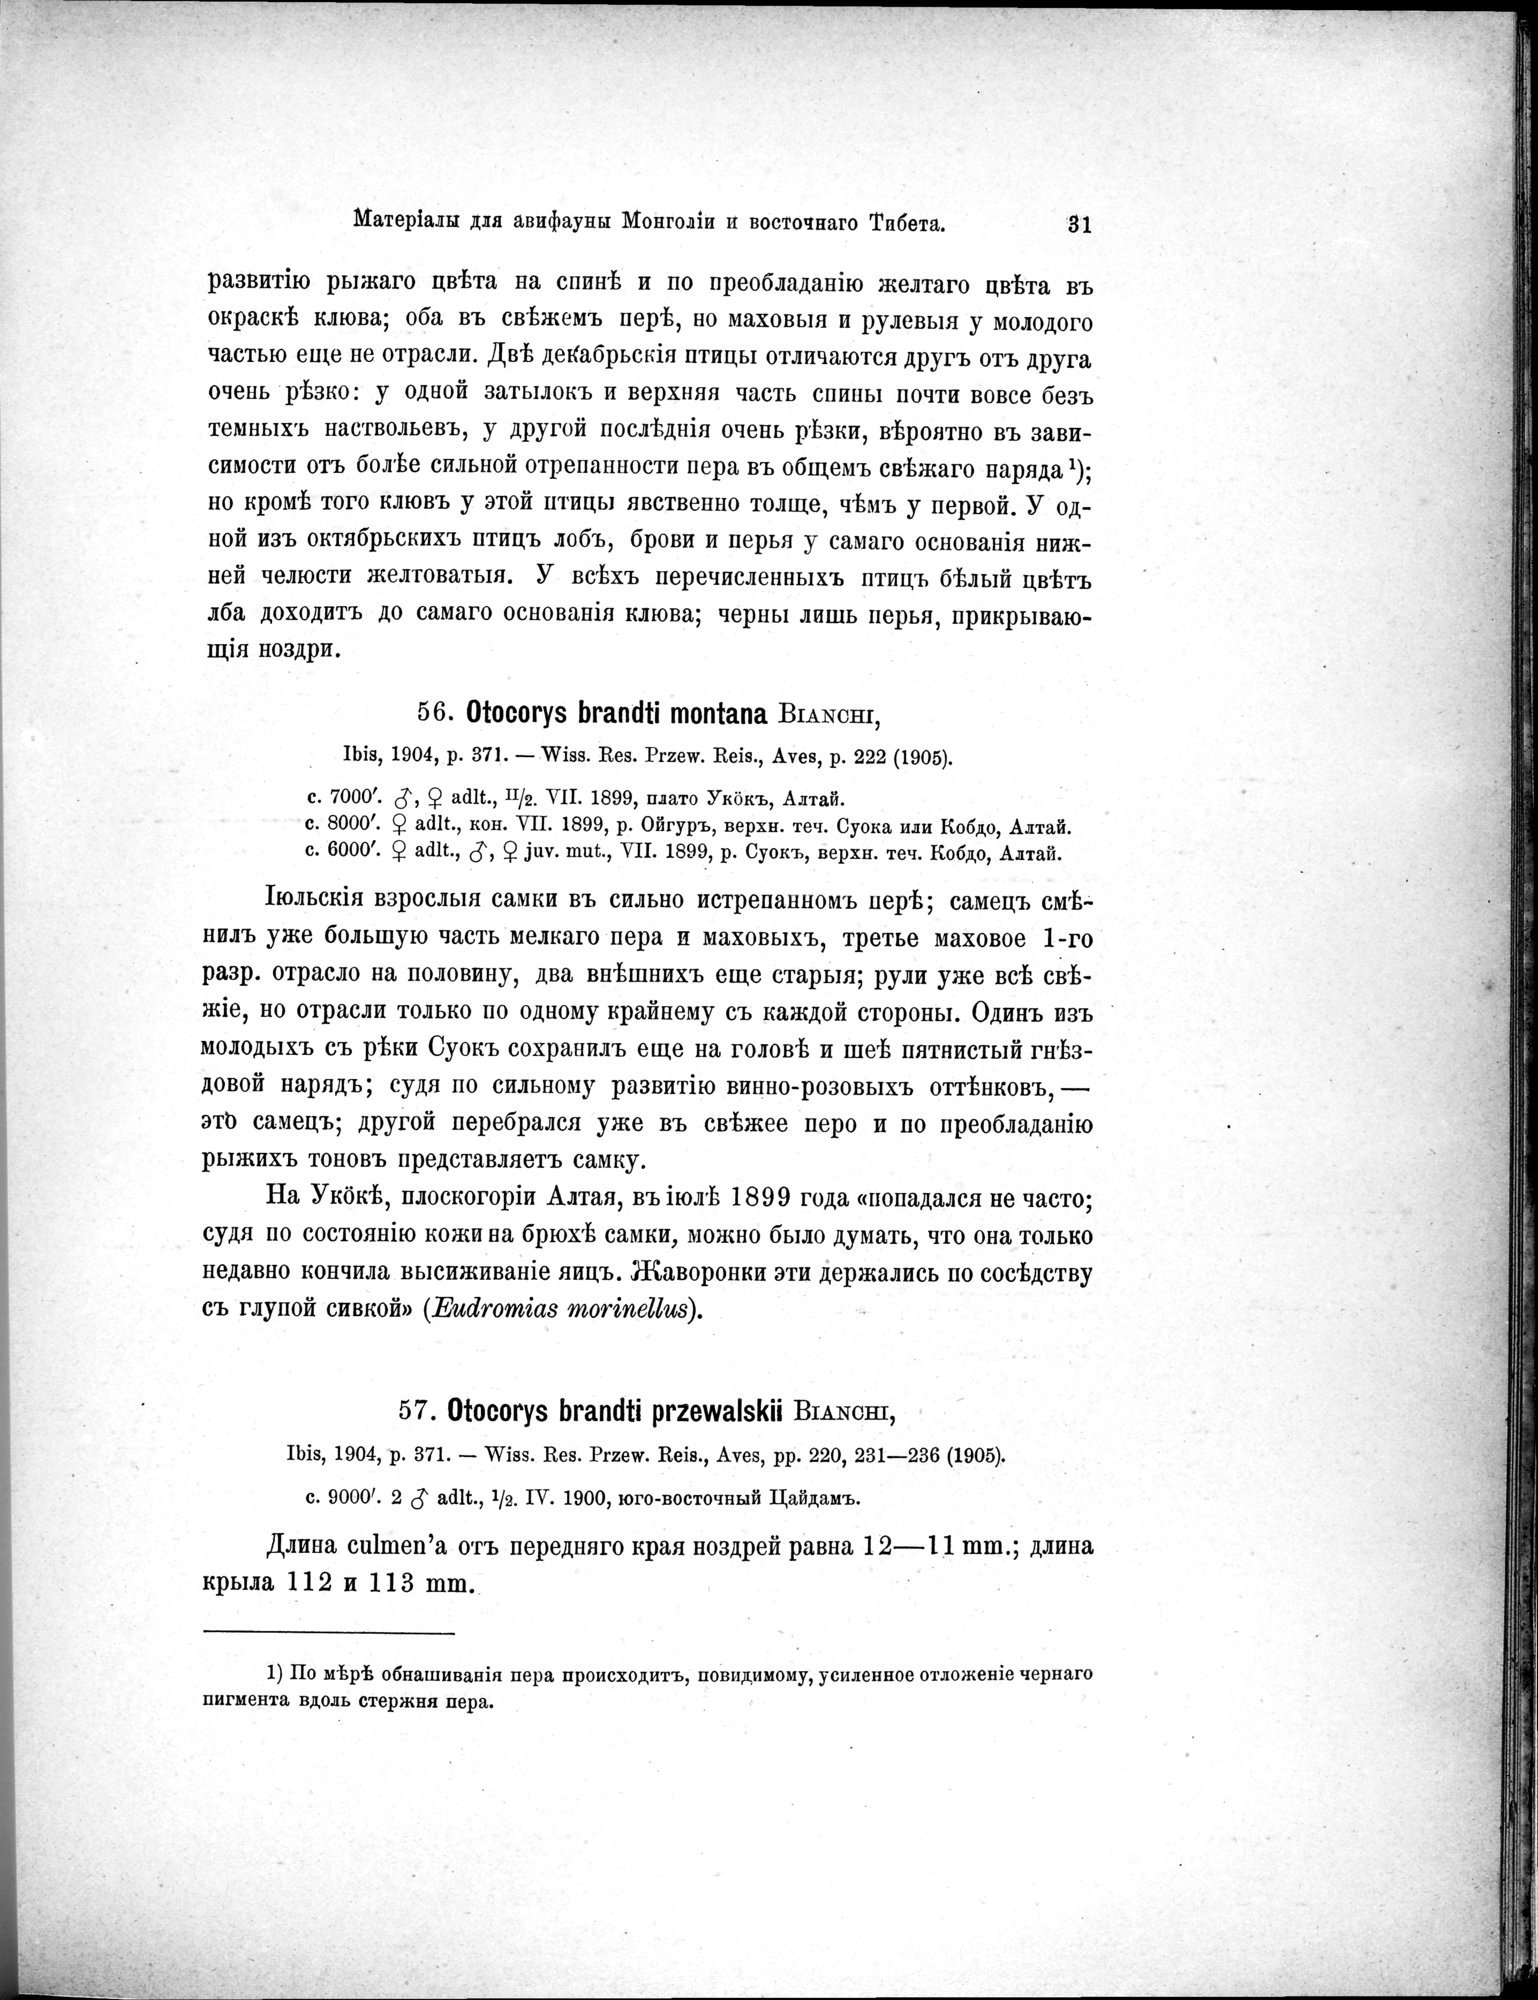 Mongoliia i Kam : vol.5 / Page 103 (Grayscale High Resolution Image)